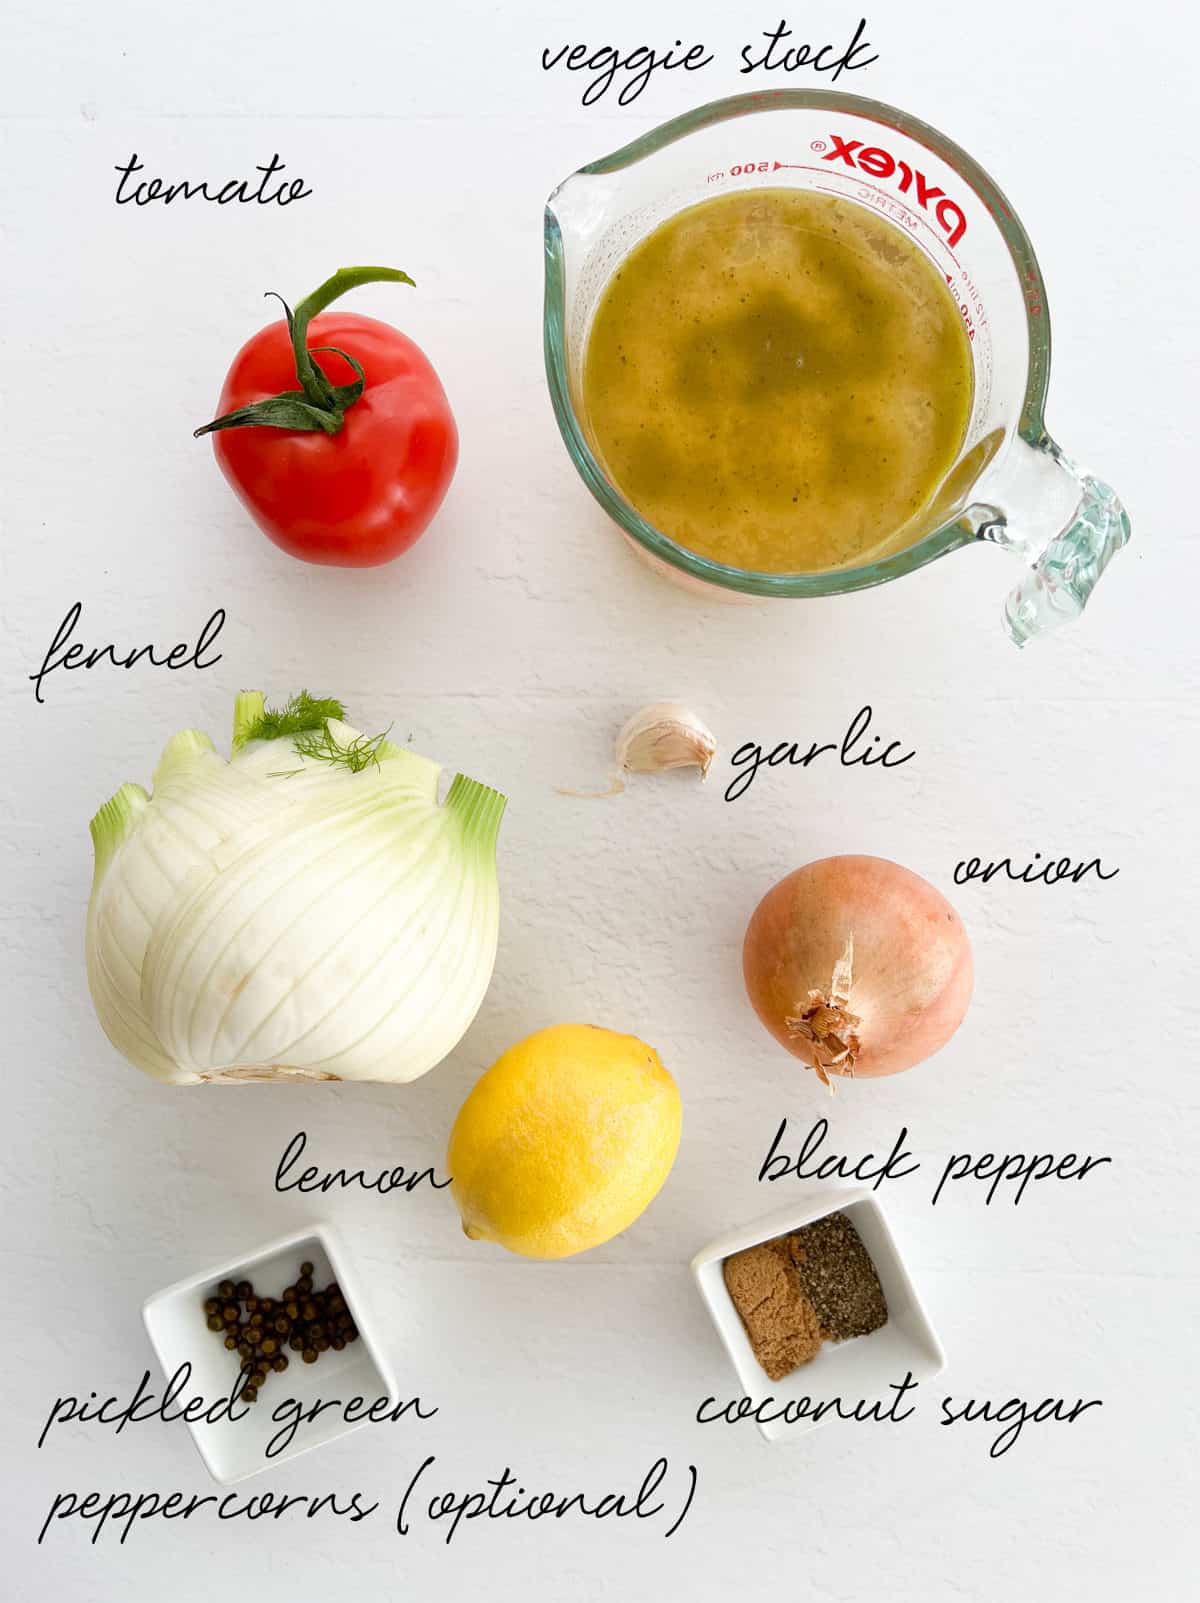 a tomato, fennel, garlic, onion, veggie stock, pepper, coconut sugar and lemon laid out